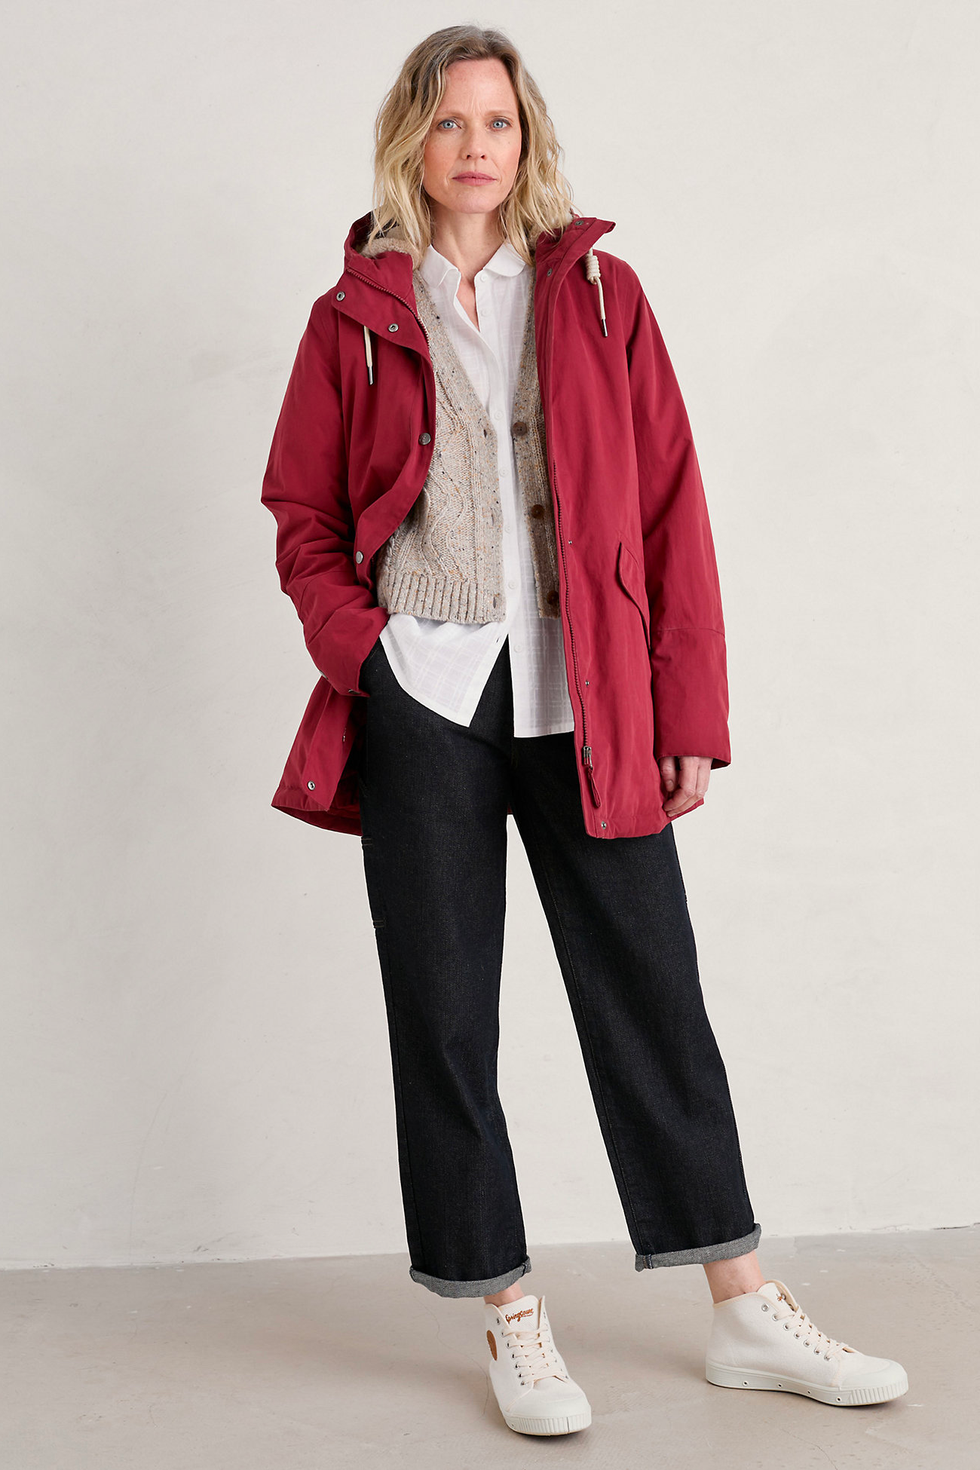 Cotton Rich Waterproof Hooded Raincoat, £150